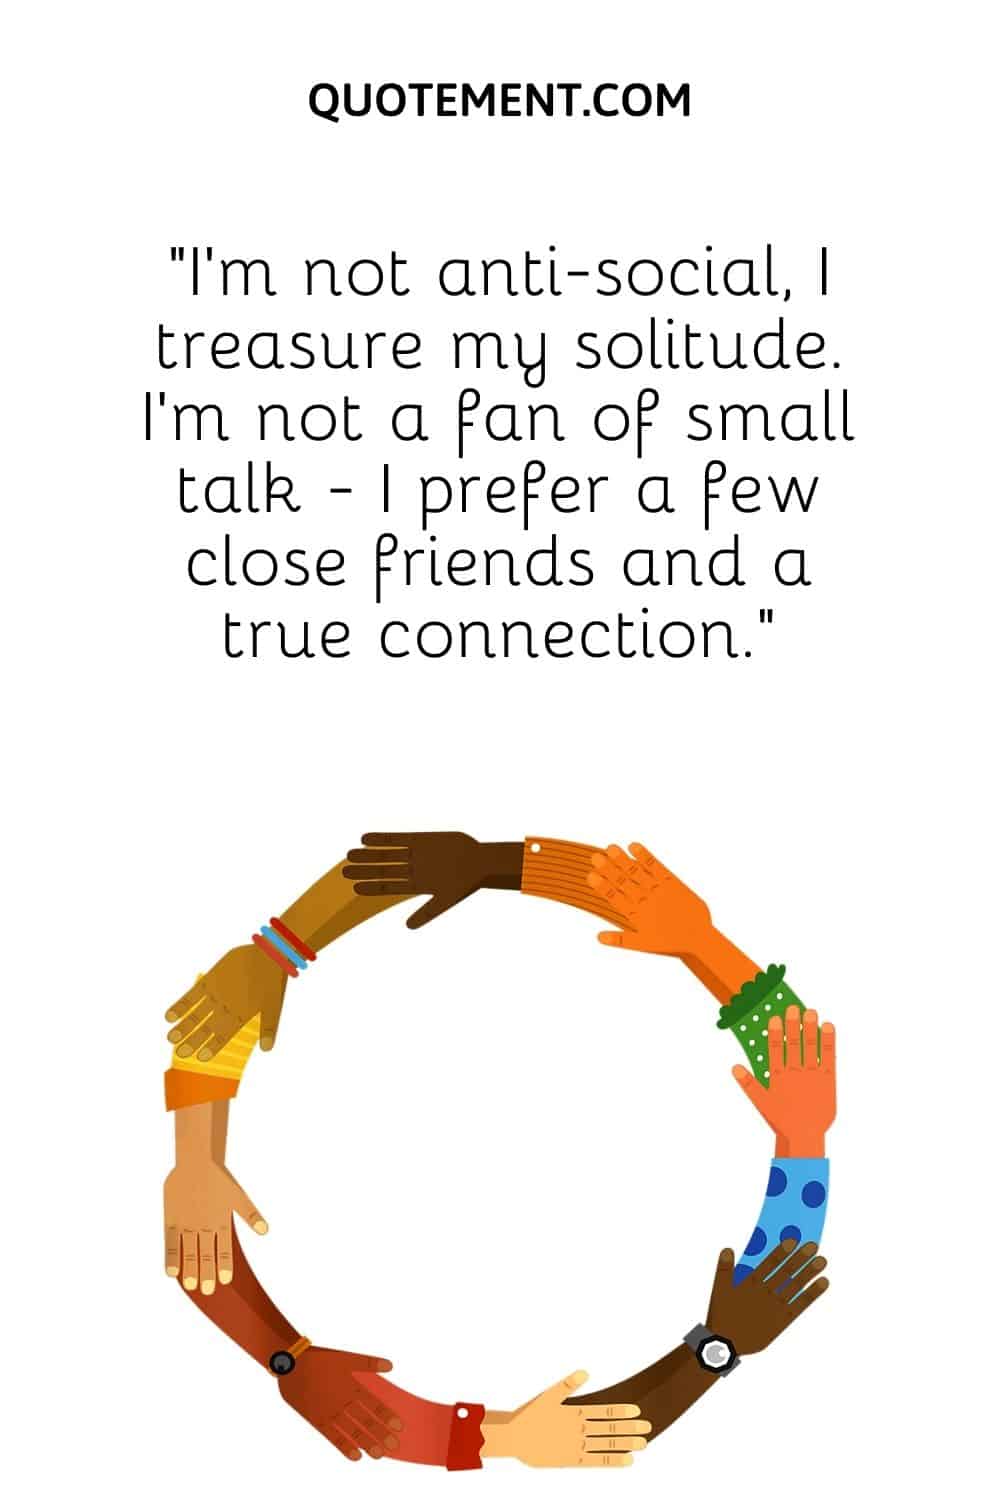 “I’m not anti-social, I treasure my solitude. I’m not a fan of small talk - I prefer a few close friends and a true connection.”